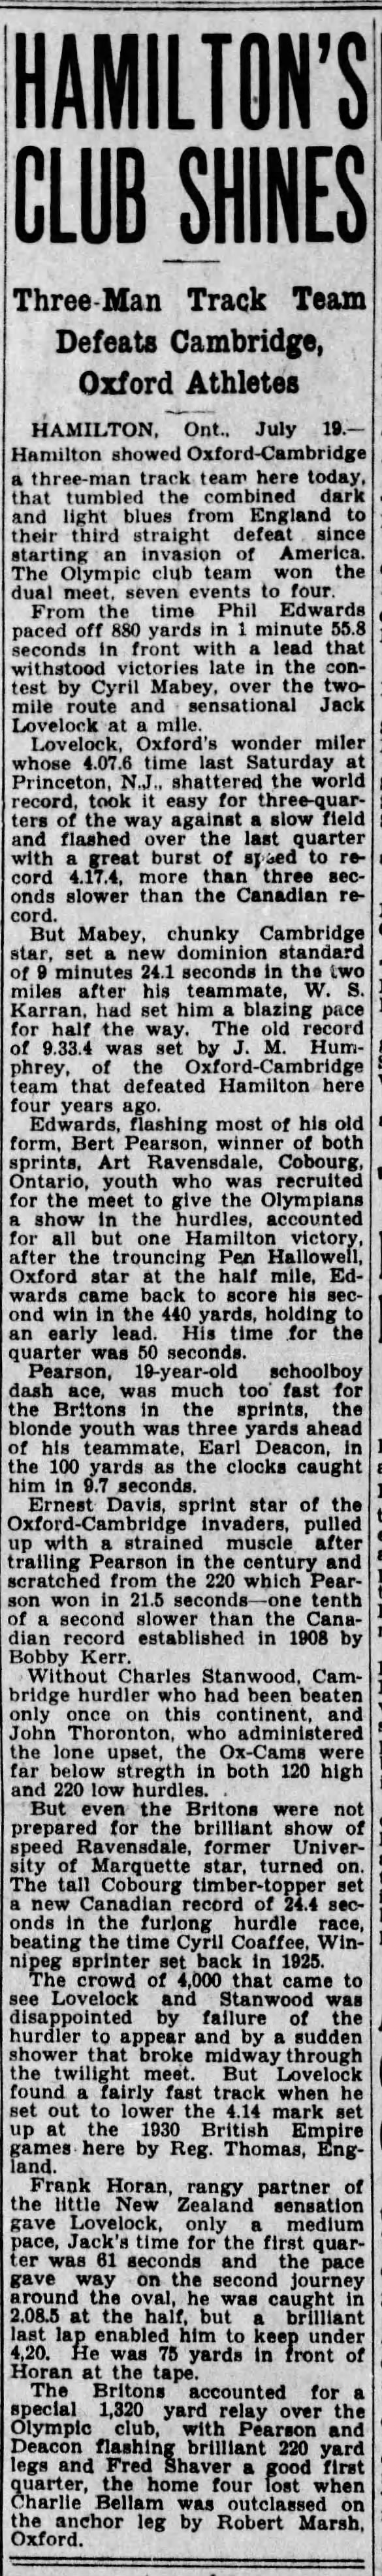 1933-07-20 Track and Field -Ravensdale at Hamilton meet -Saskatoon Star Phoenix